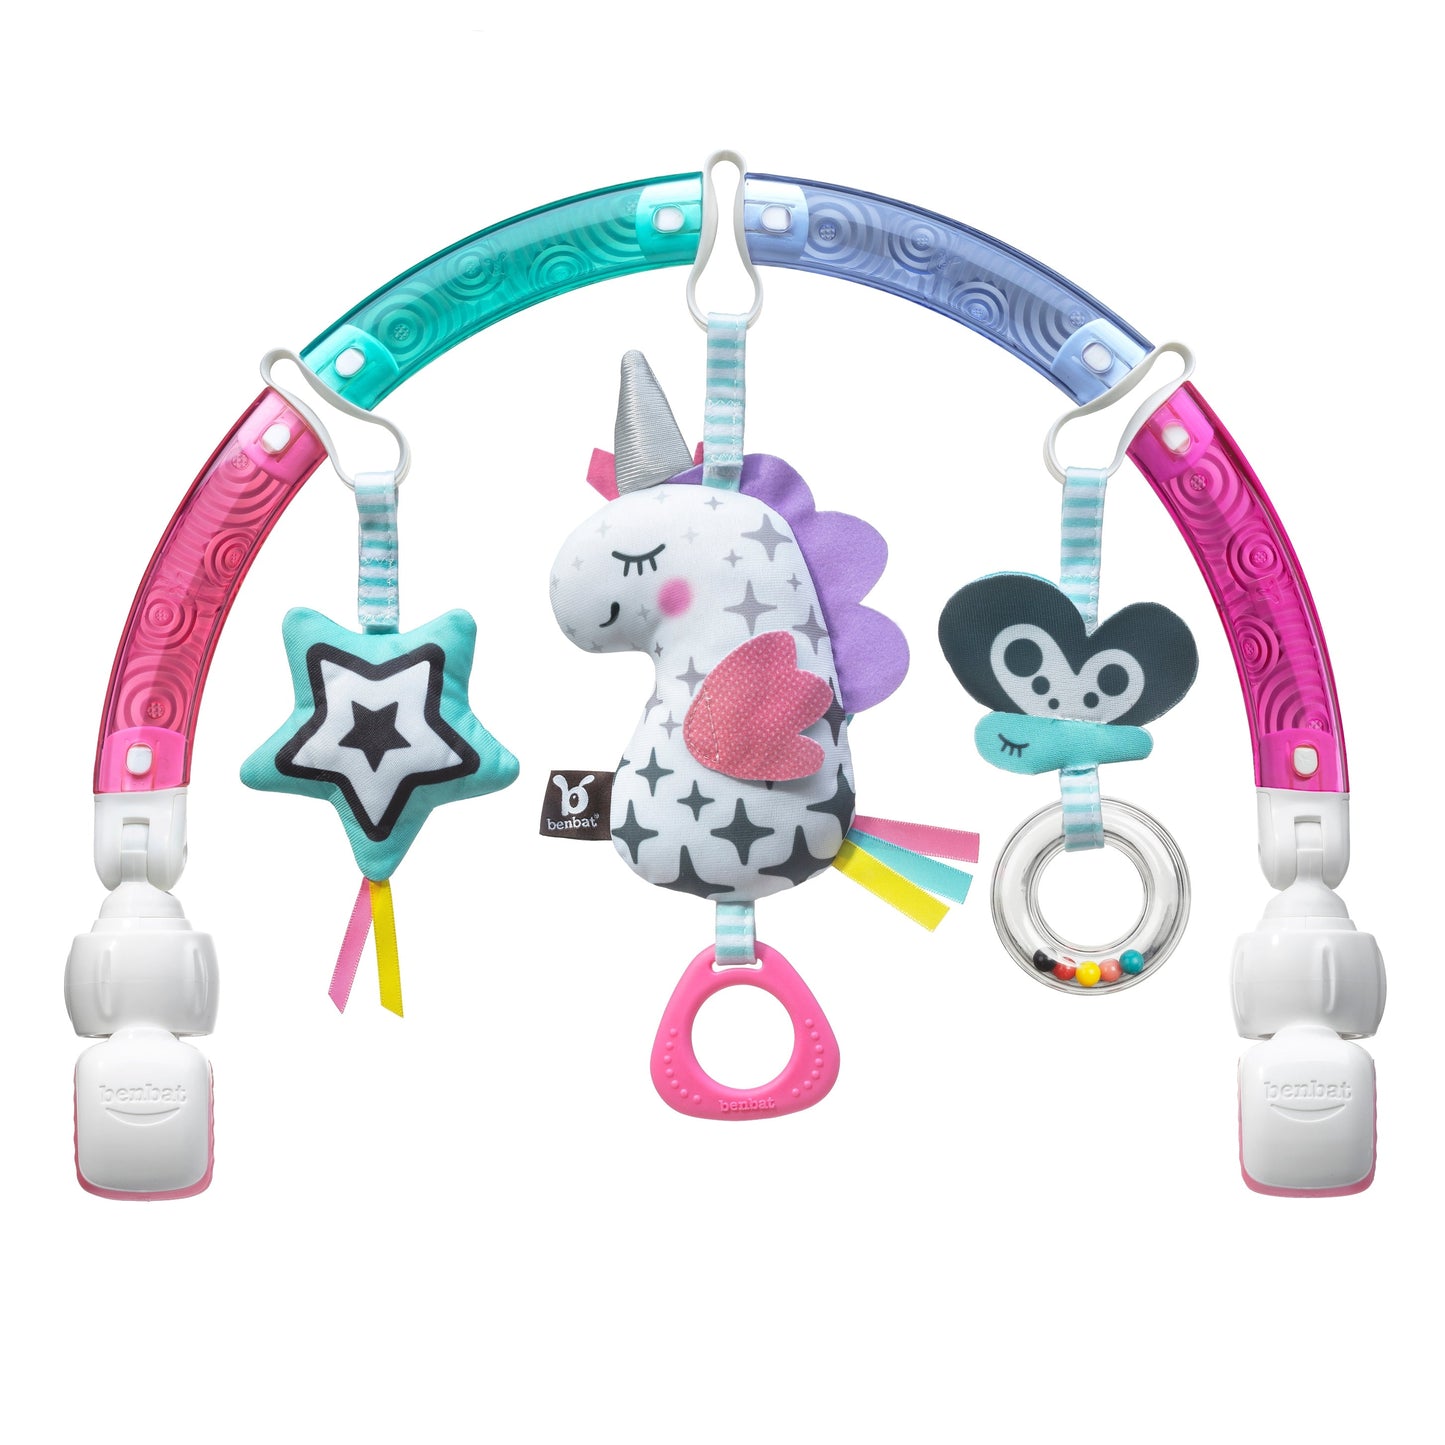 Benbat Unicorn Play Arch Mobile toy